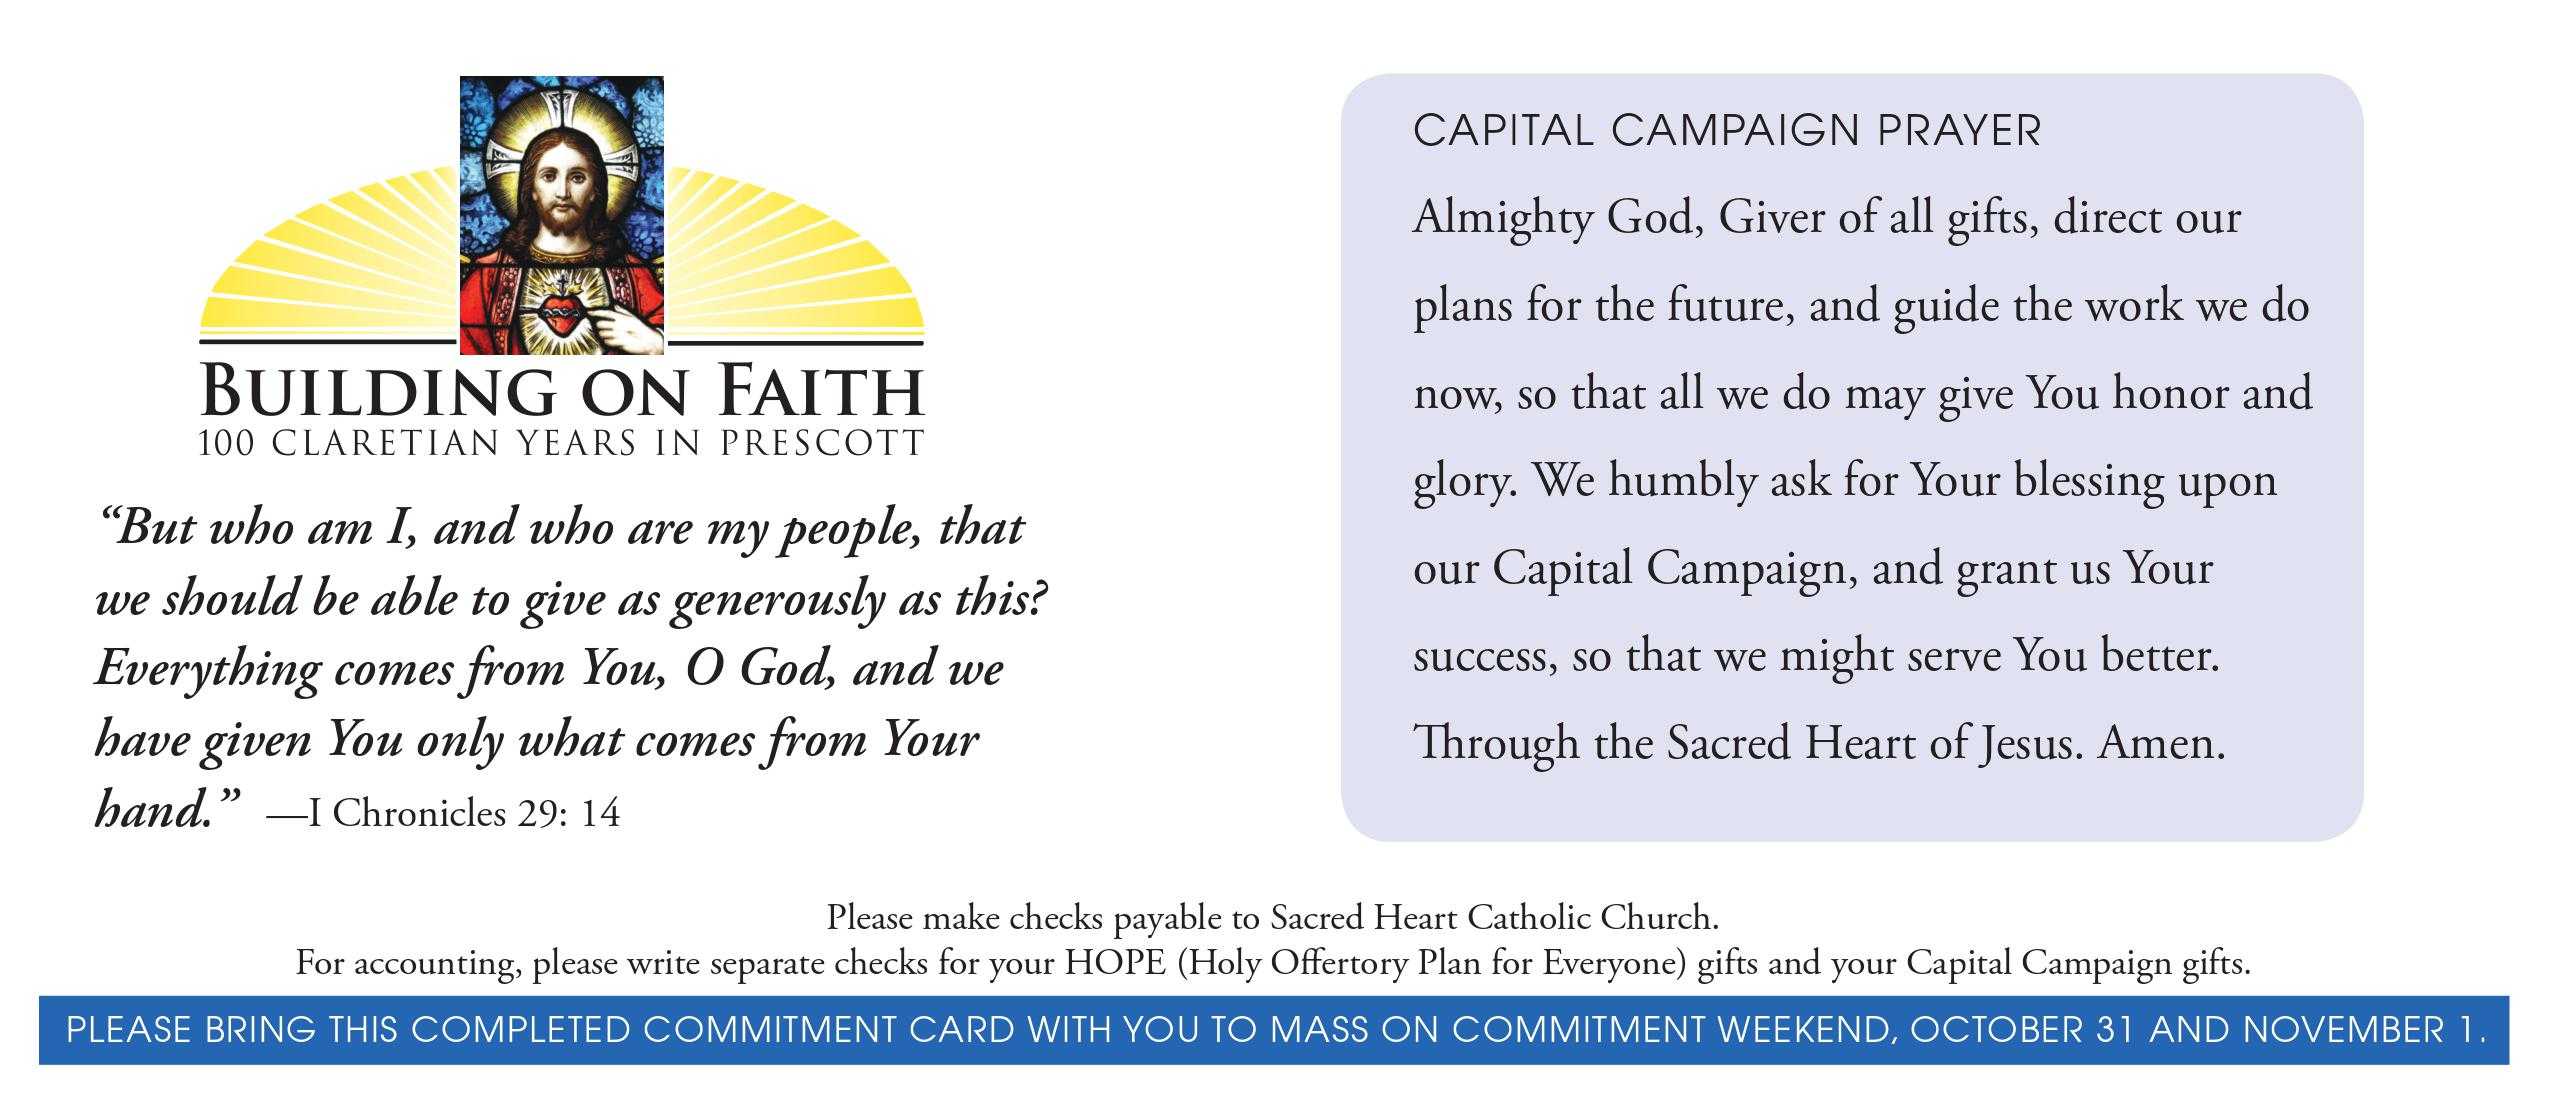 Church Capital Campaign Pledge Card Samples In Pledge Card Template For Church